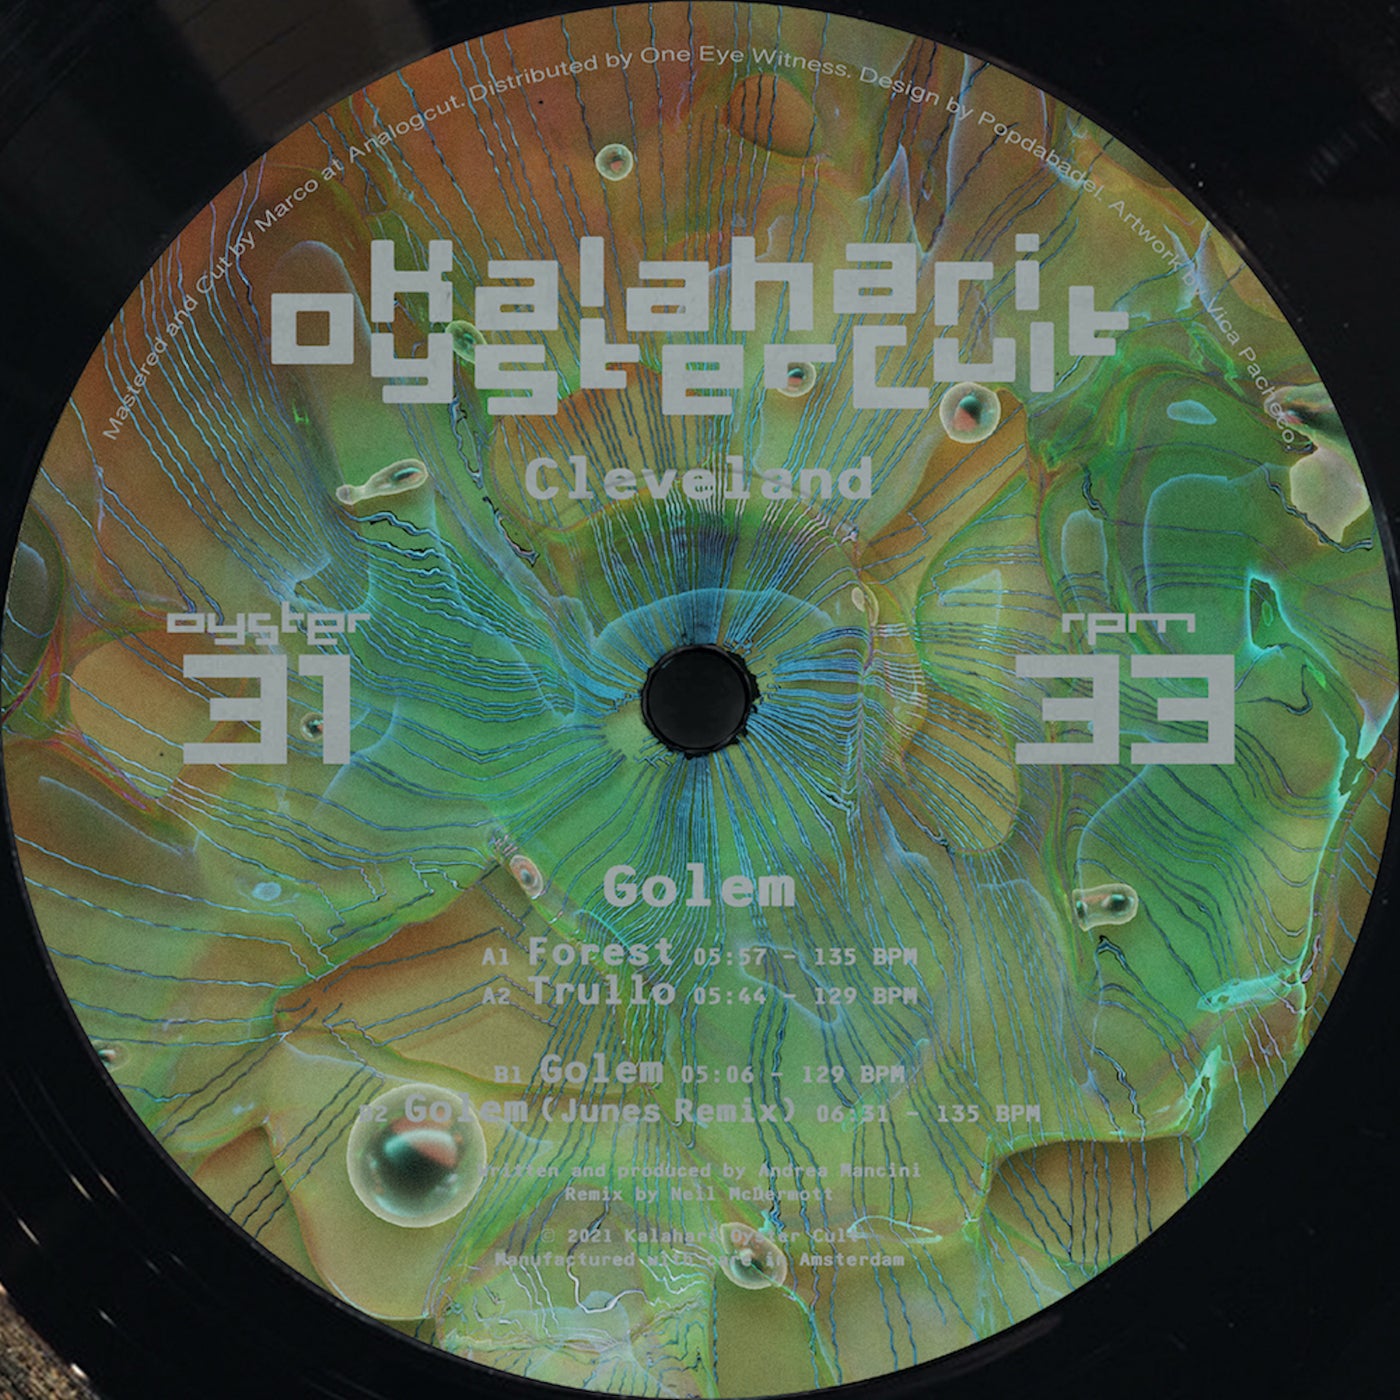 Download Cleveland - Golem on Electrobuzz